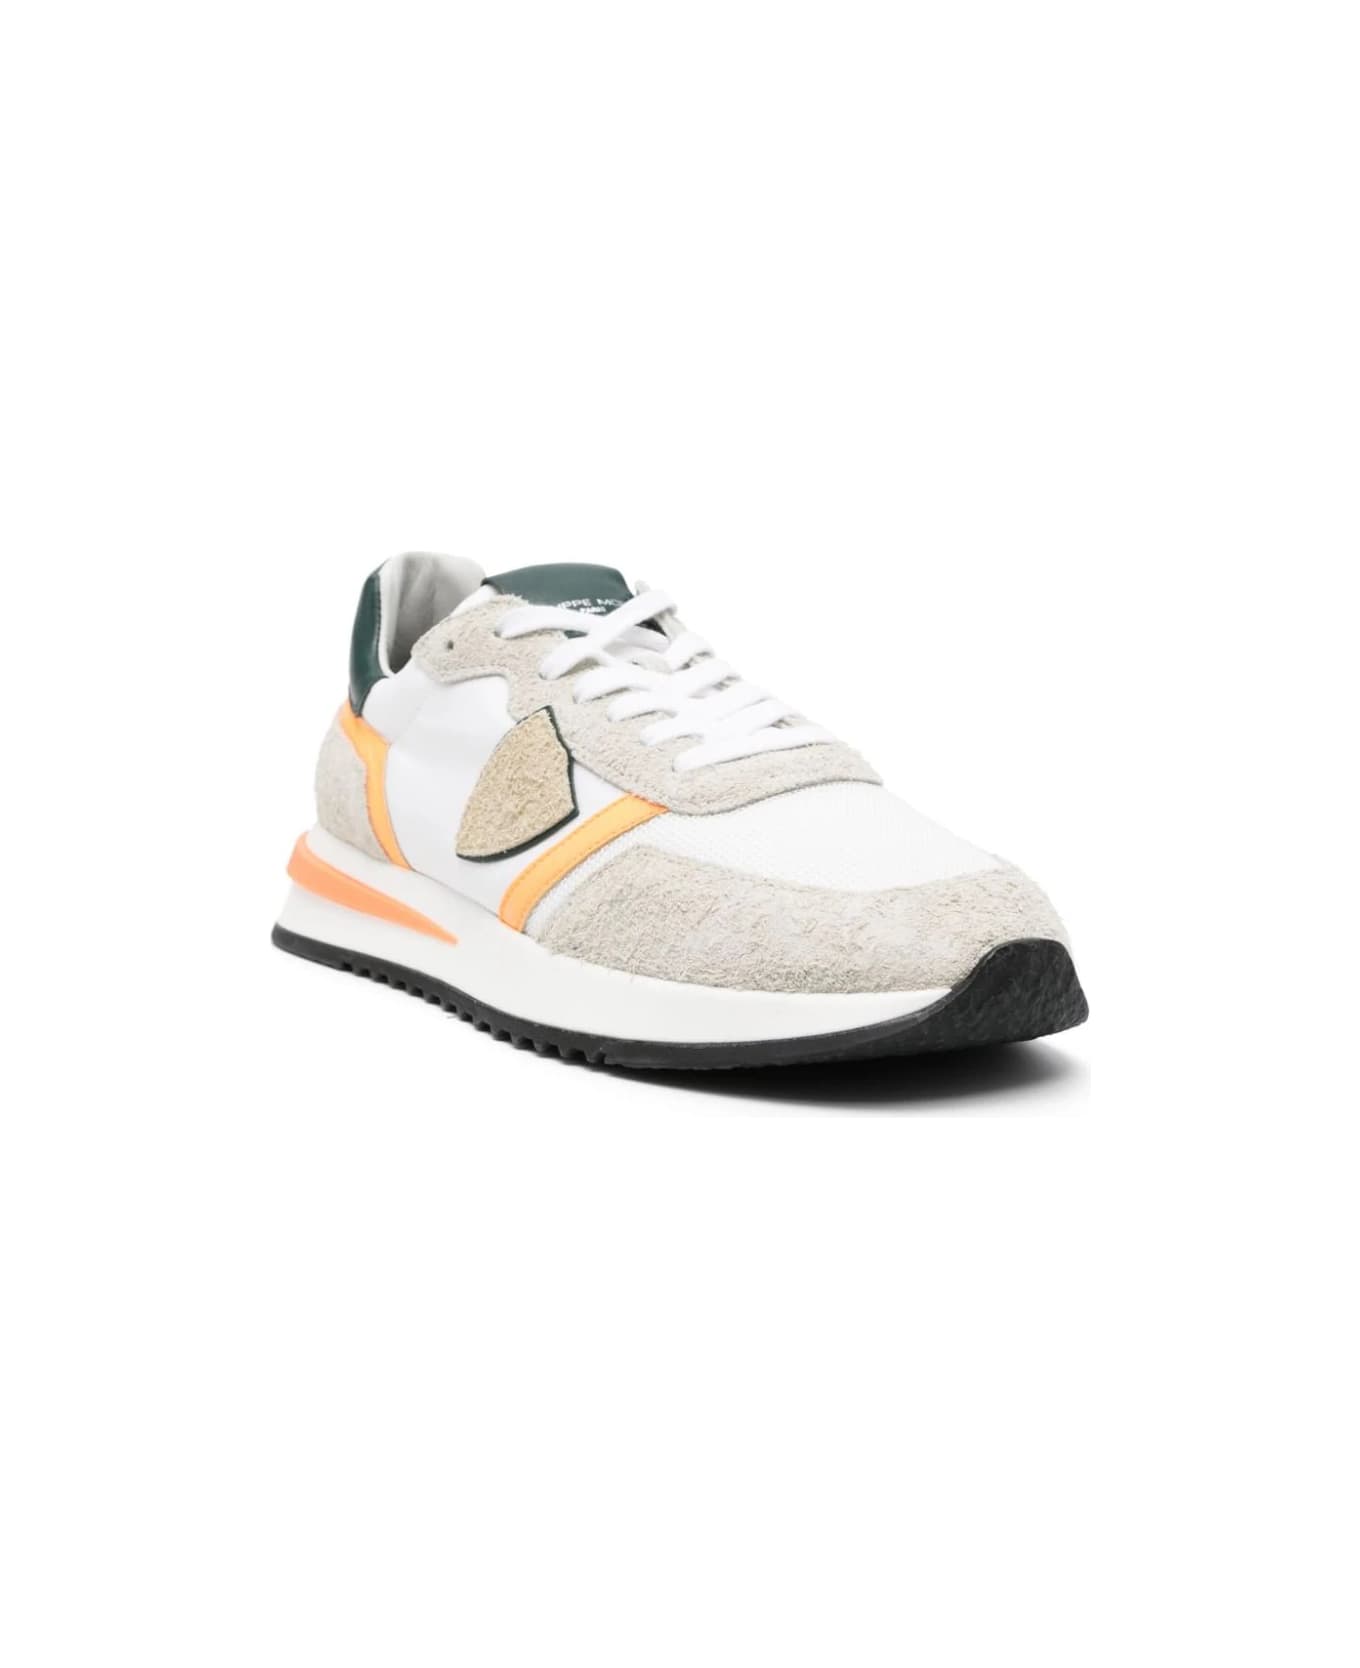 Philippe Model Tropez 2.1 Low Sneakers - White And Orange - Multicolour